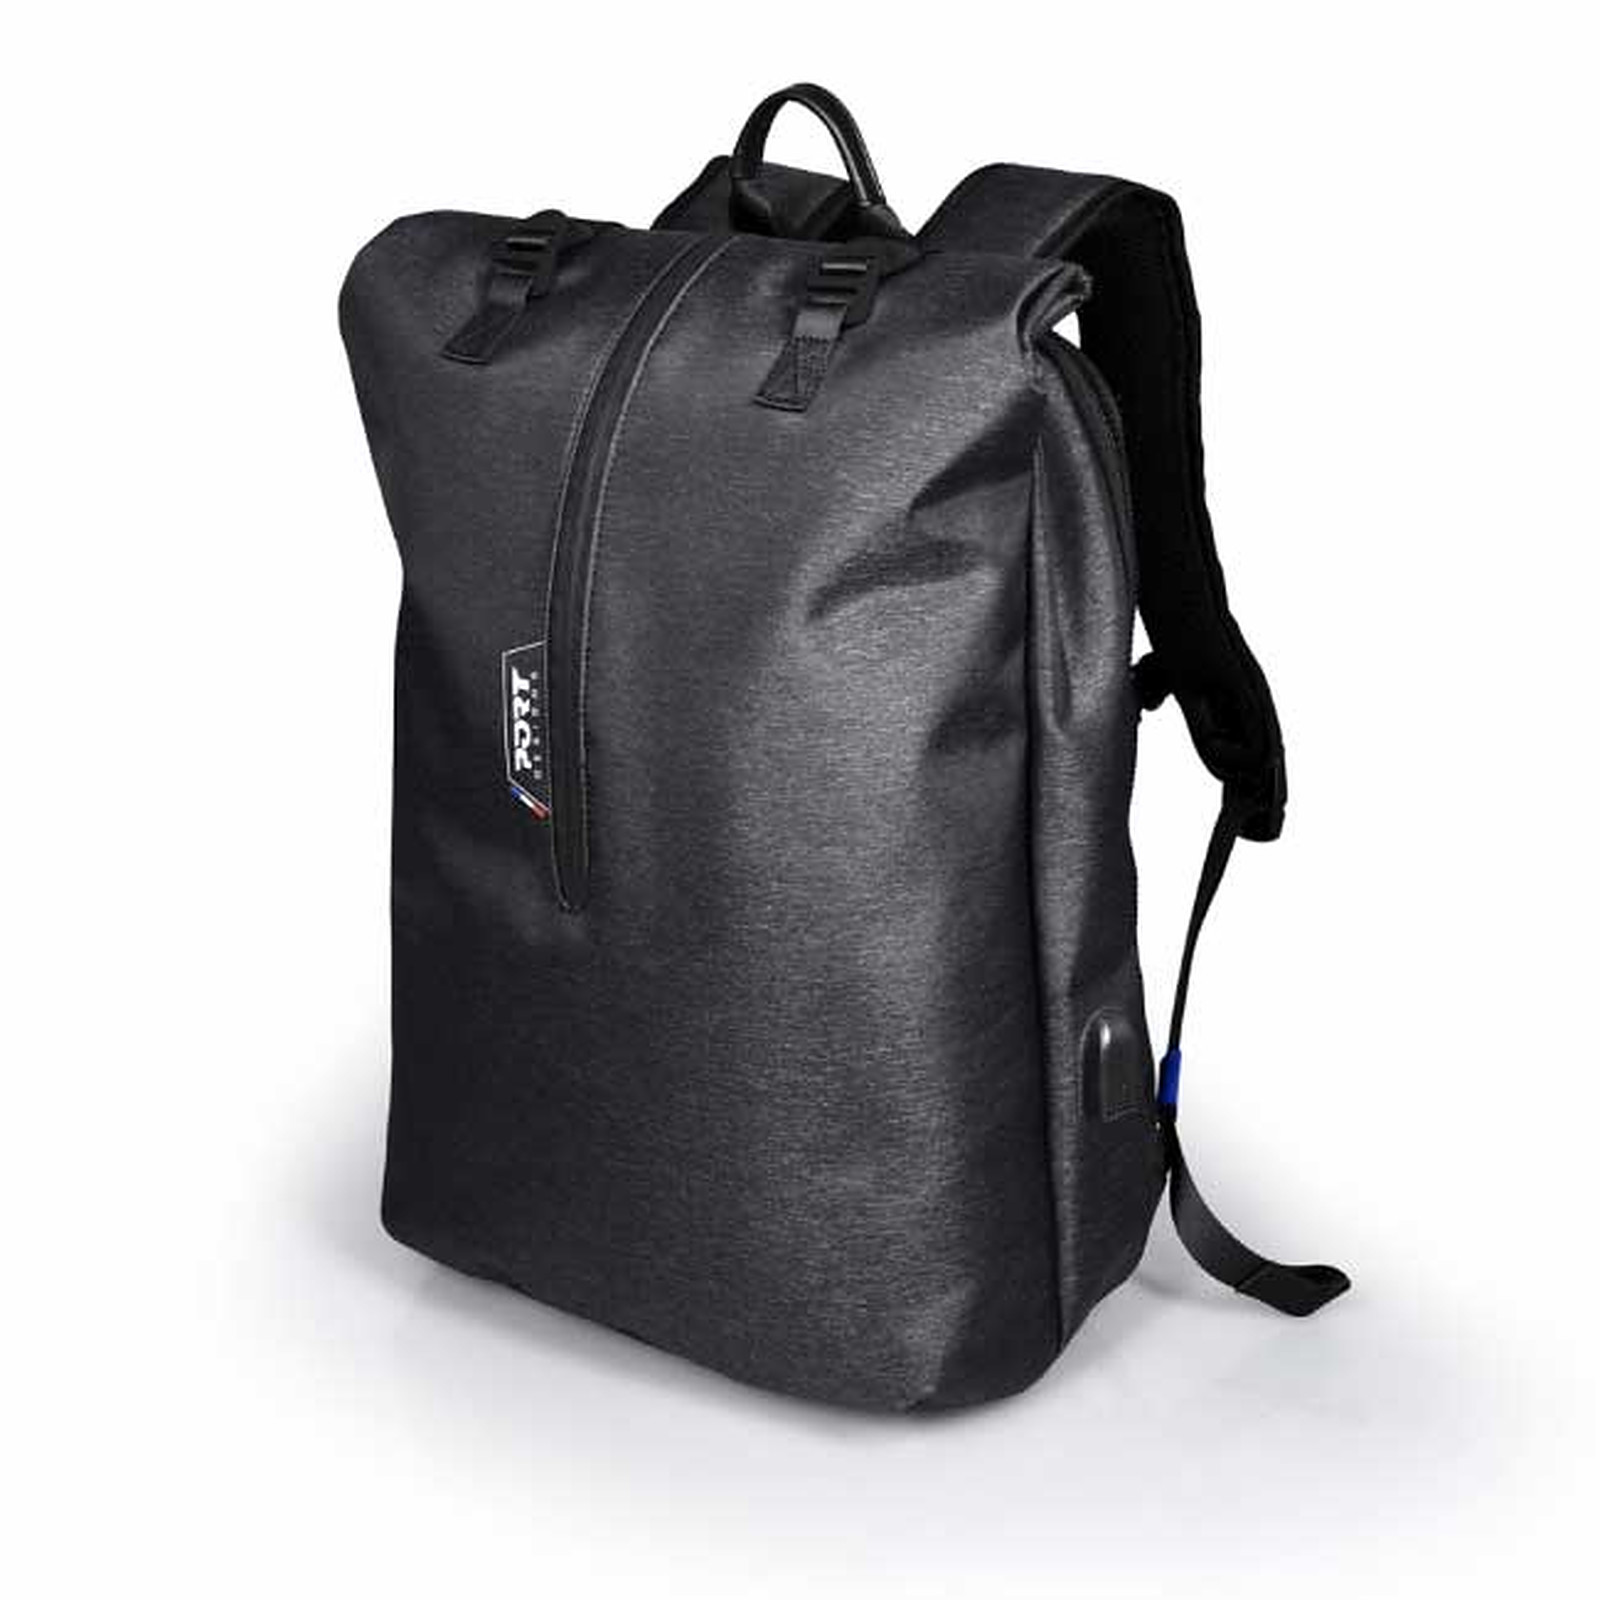 PORT Designs New York Backpack 15.6" - Sac, sacoche, housse PORT Designs